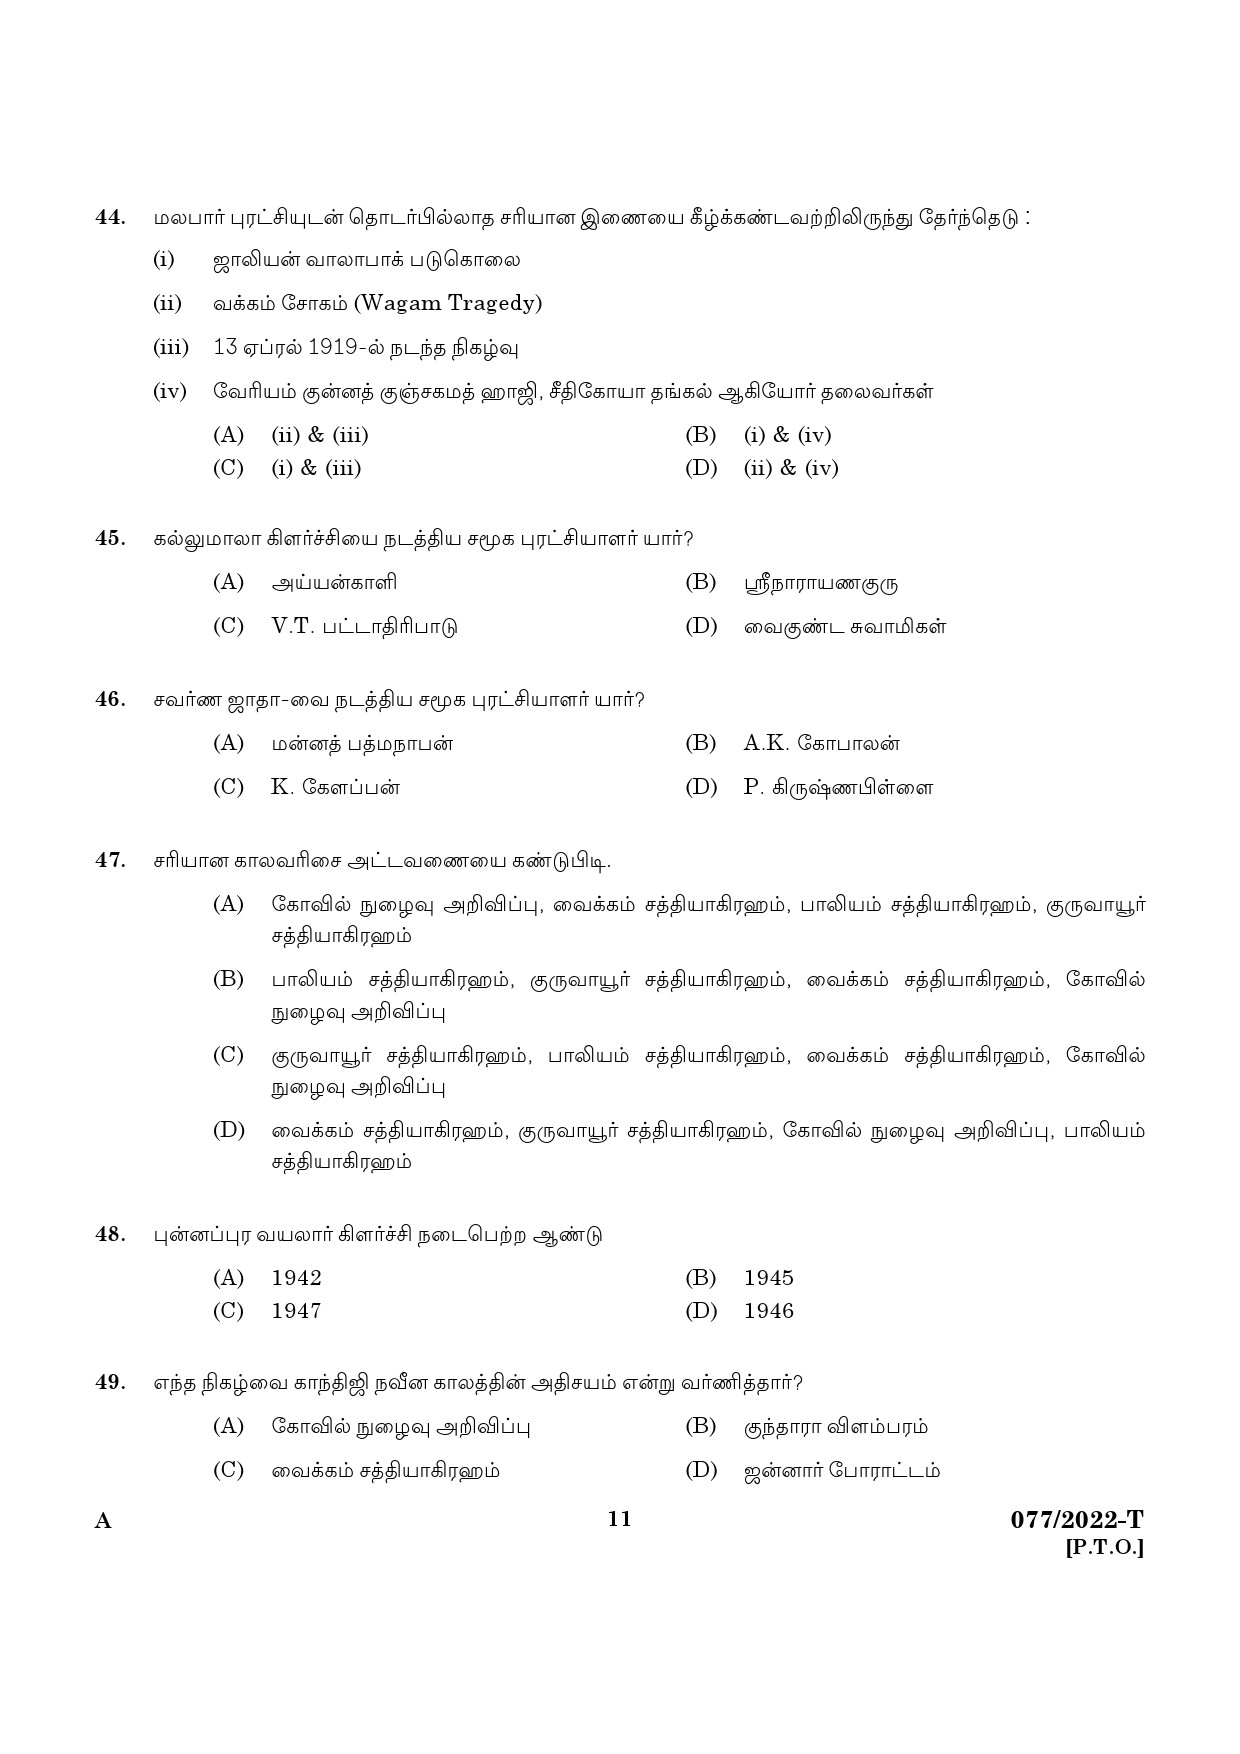 KPSC Common Preliminary Exam 2022 Upto SSLC Level Stage VI Tamil 0772022 T 9